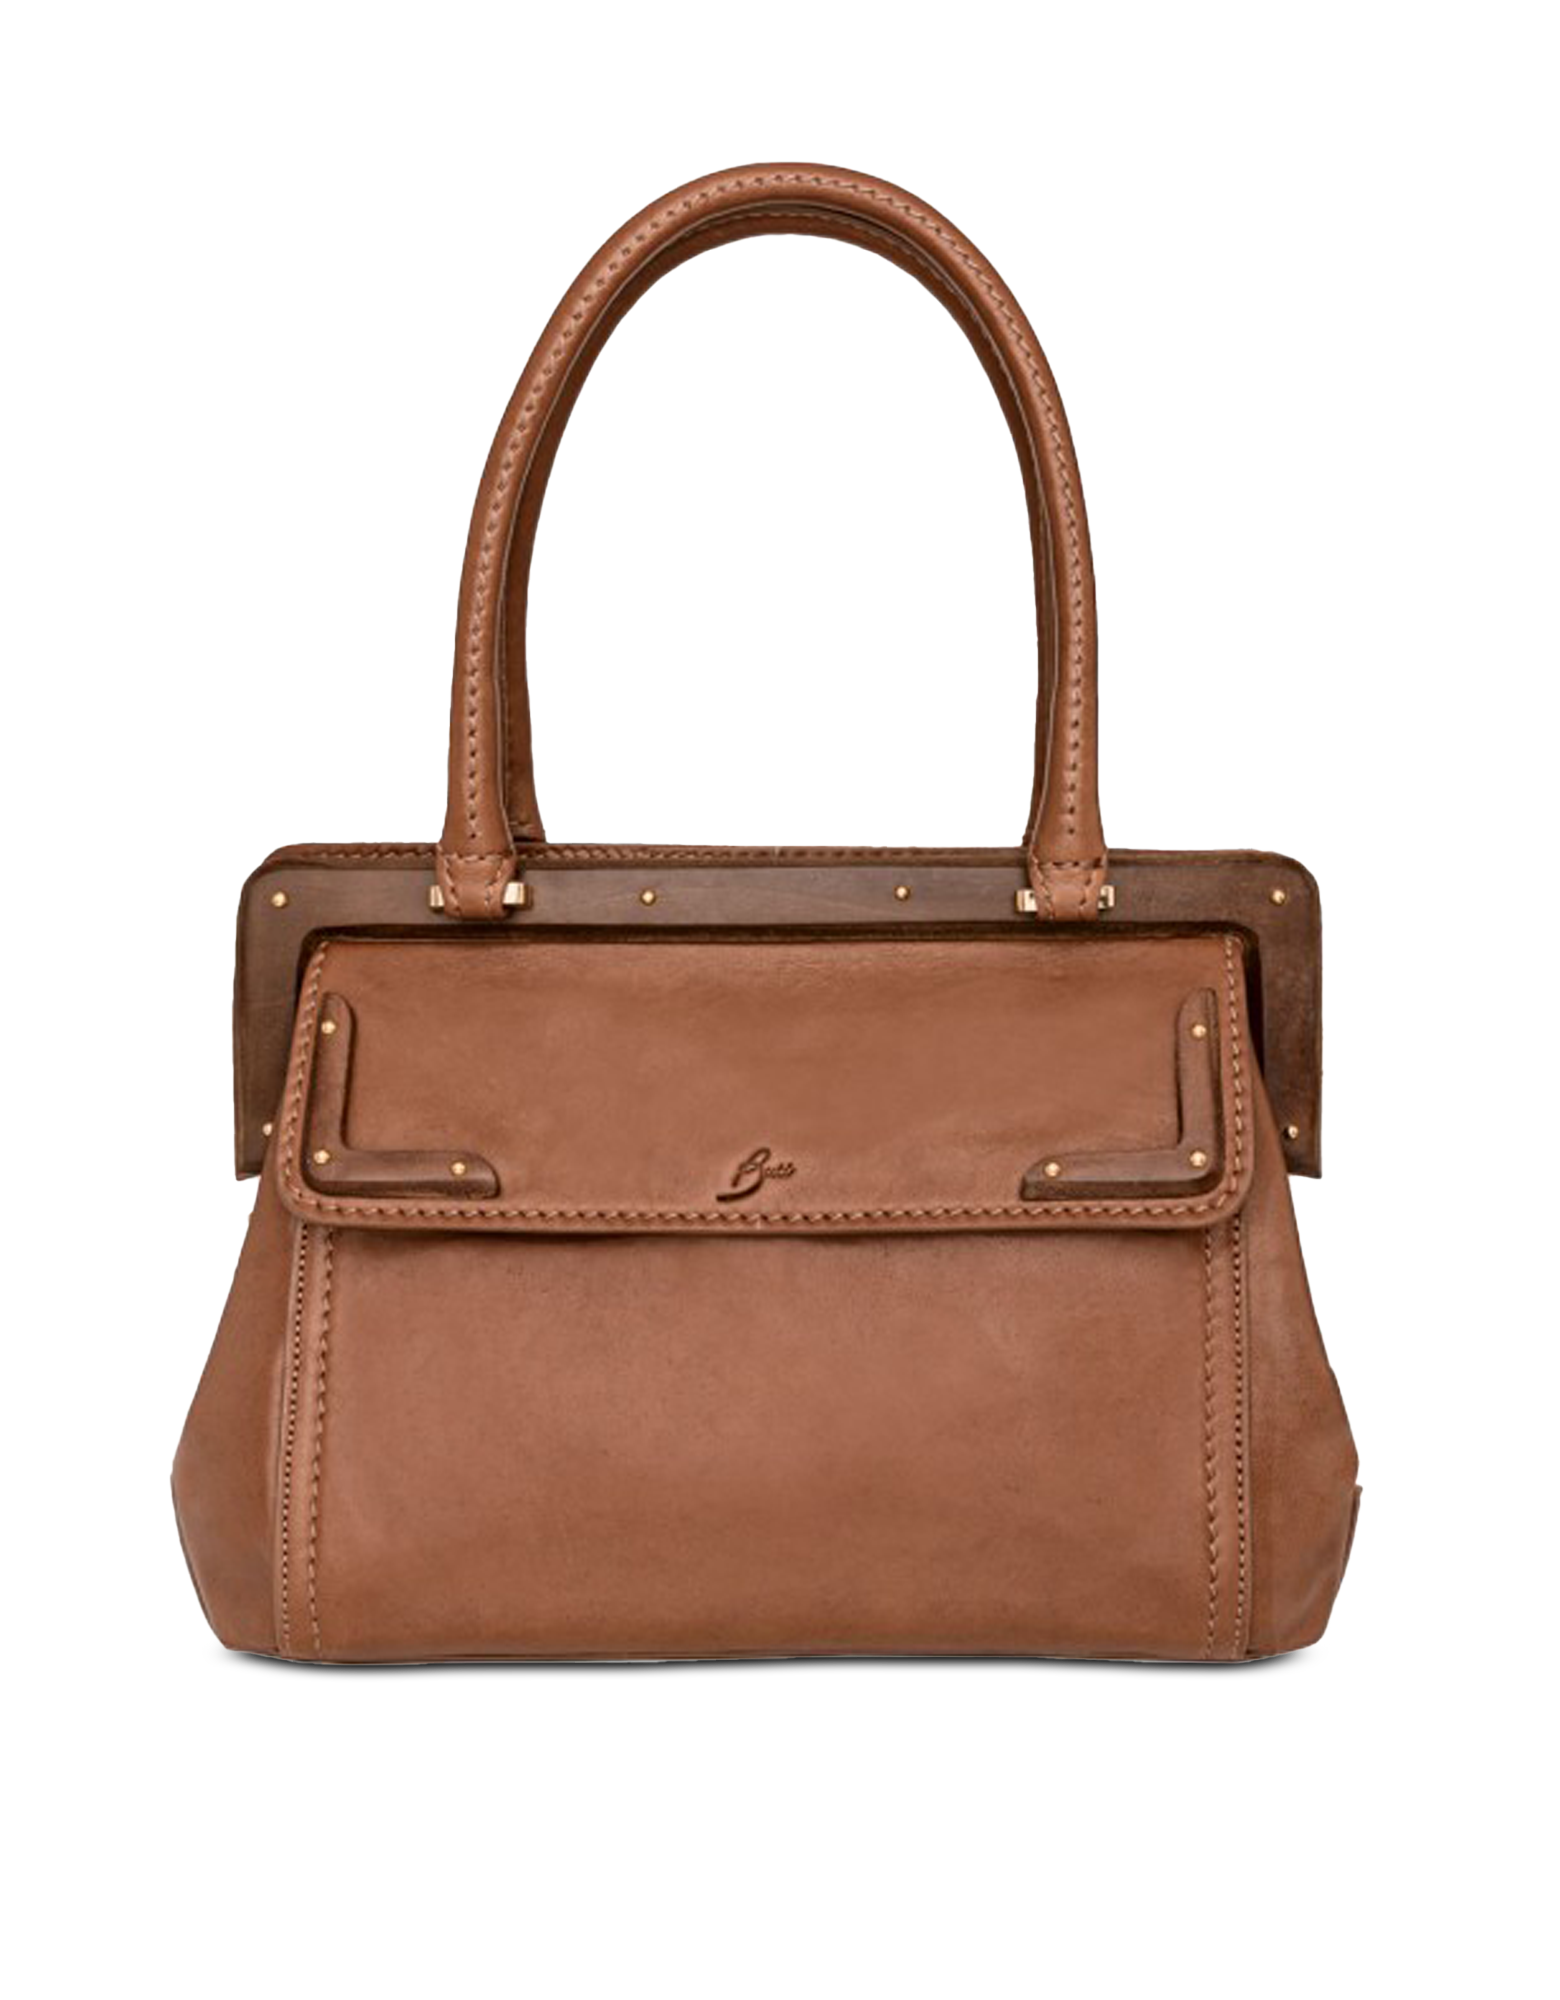 Buti 1630 Brown Leather Large Top Handle Satchel Bag